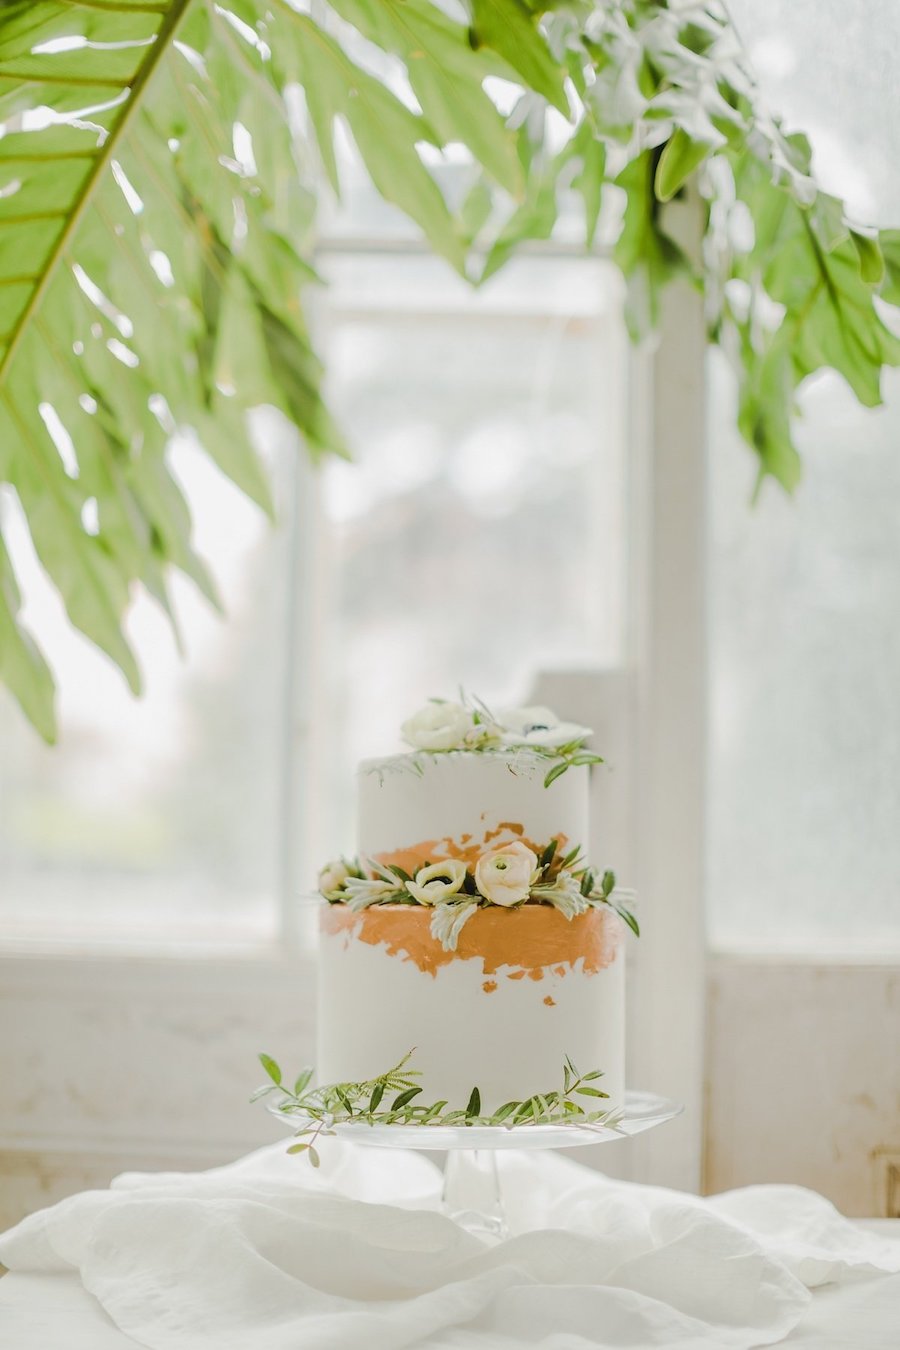 wedding cake bianca e oro rosa